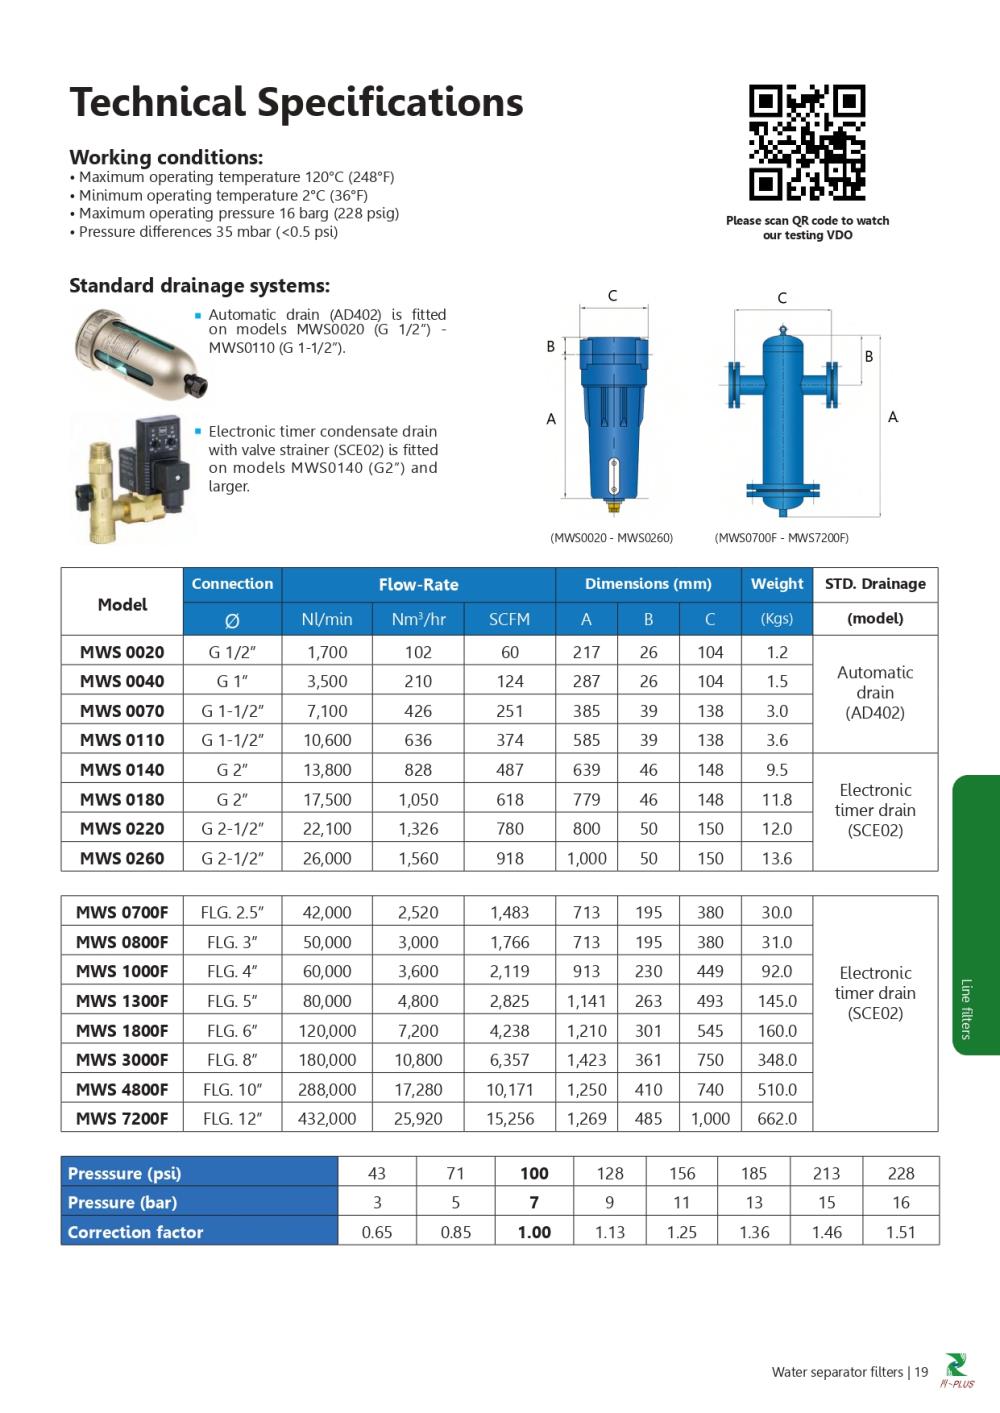 Water Separator Filter (Cyclone Filter) / ชุดกรองดักน้ำจากลมอัด ขนาดตั้งแต่ 102 ถึง 25,920 คิว/ชม.